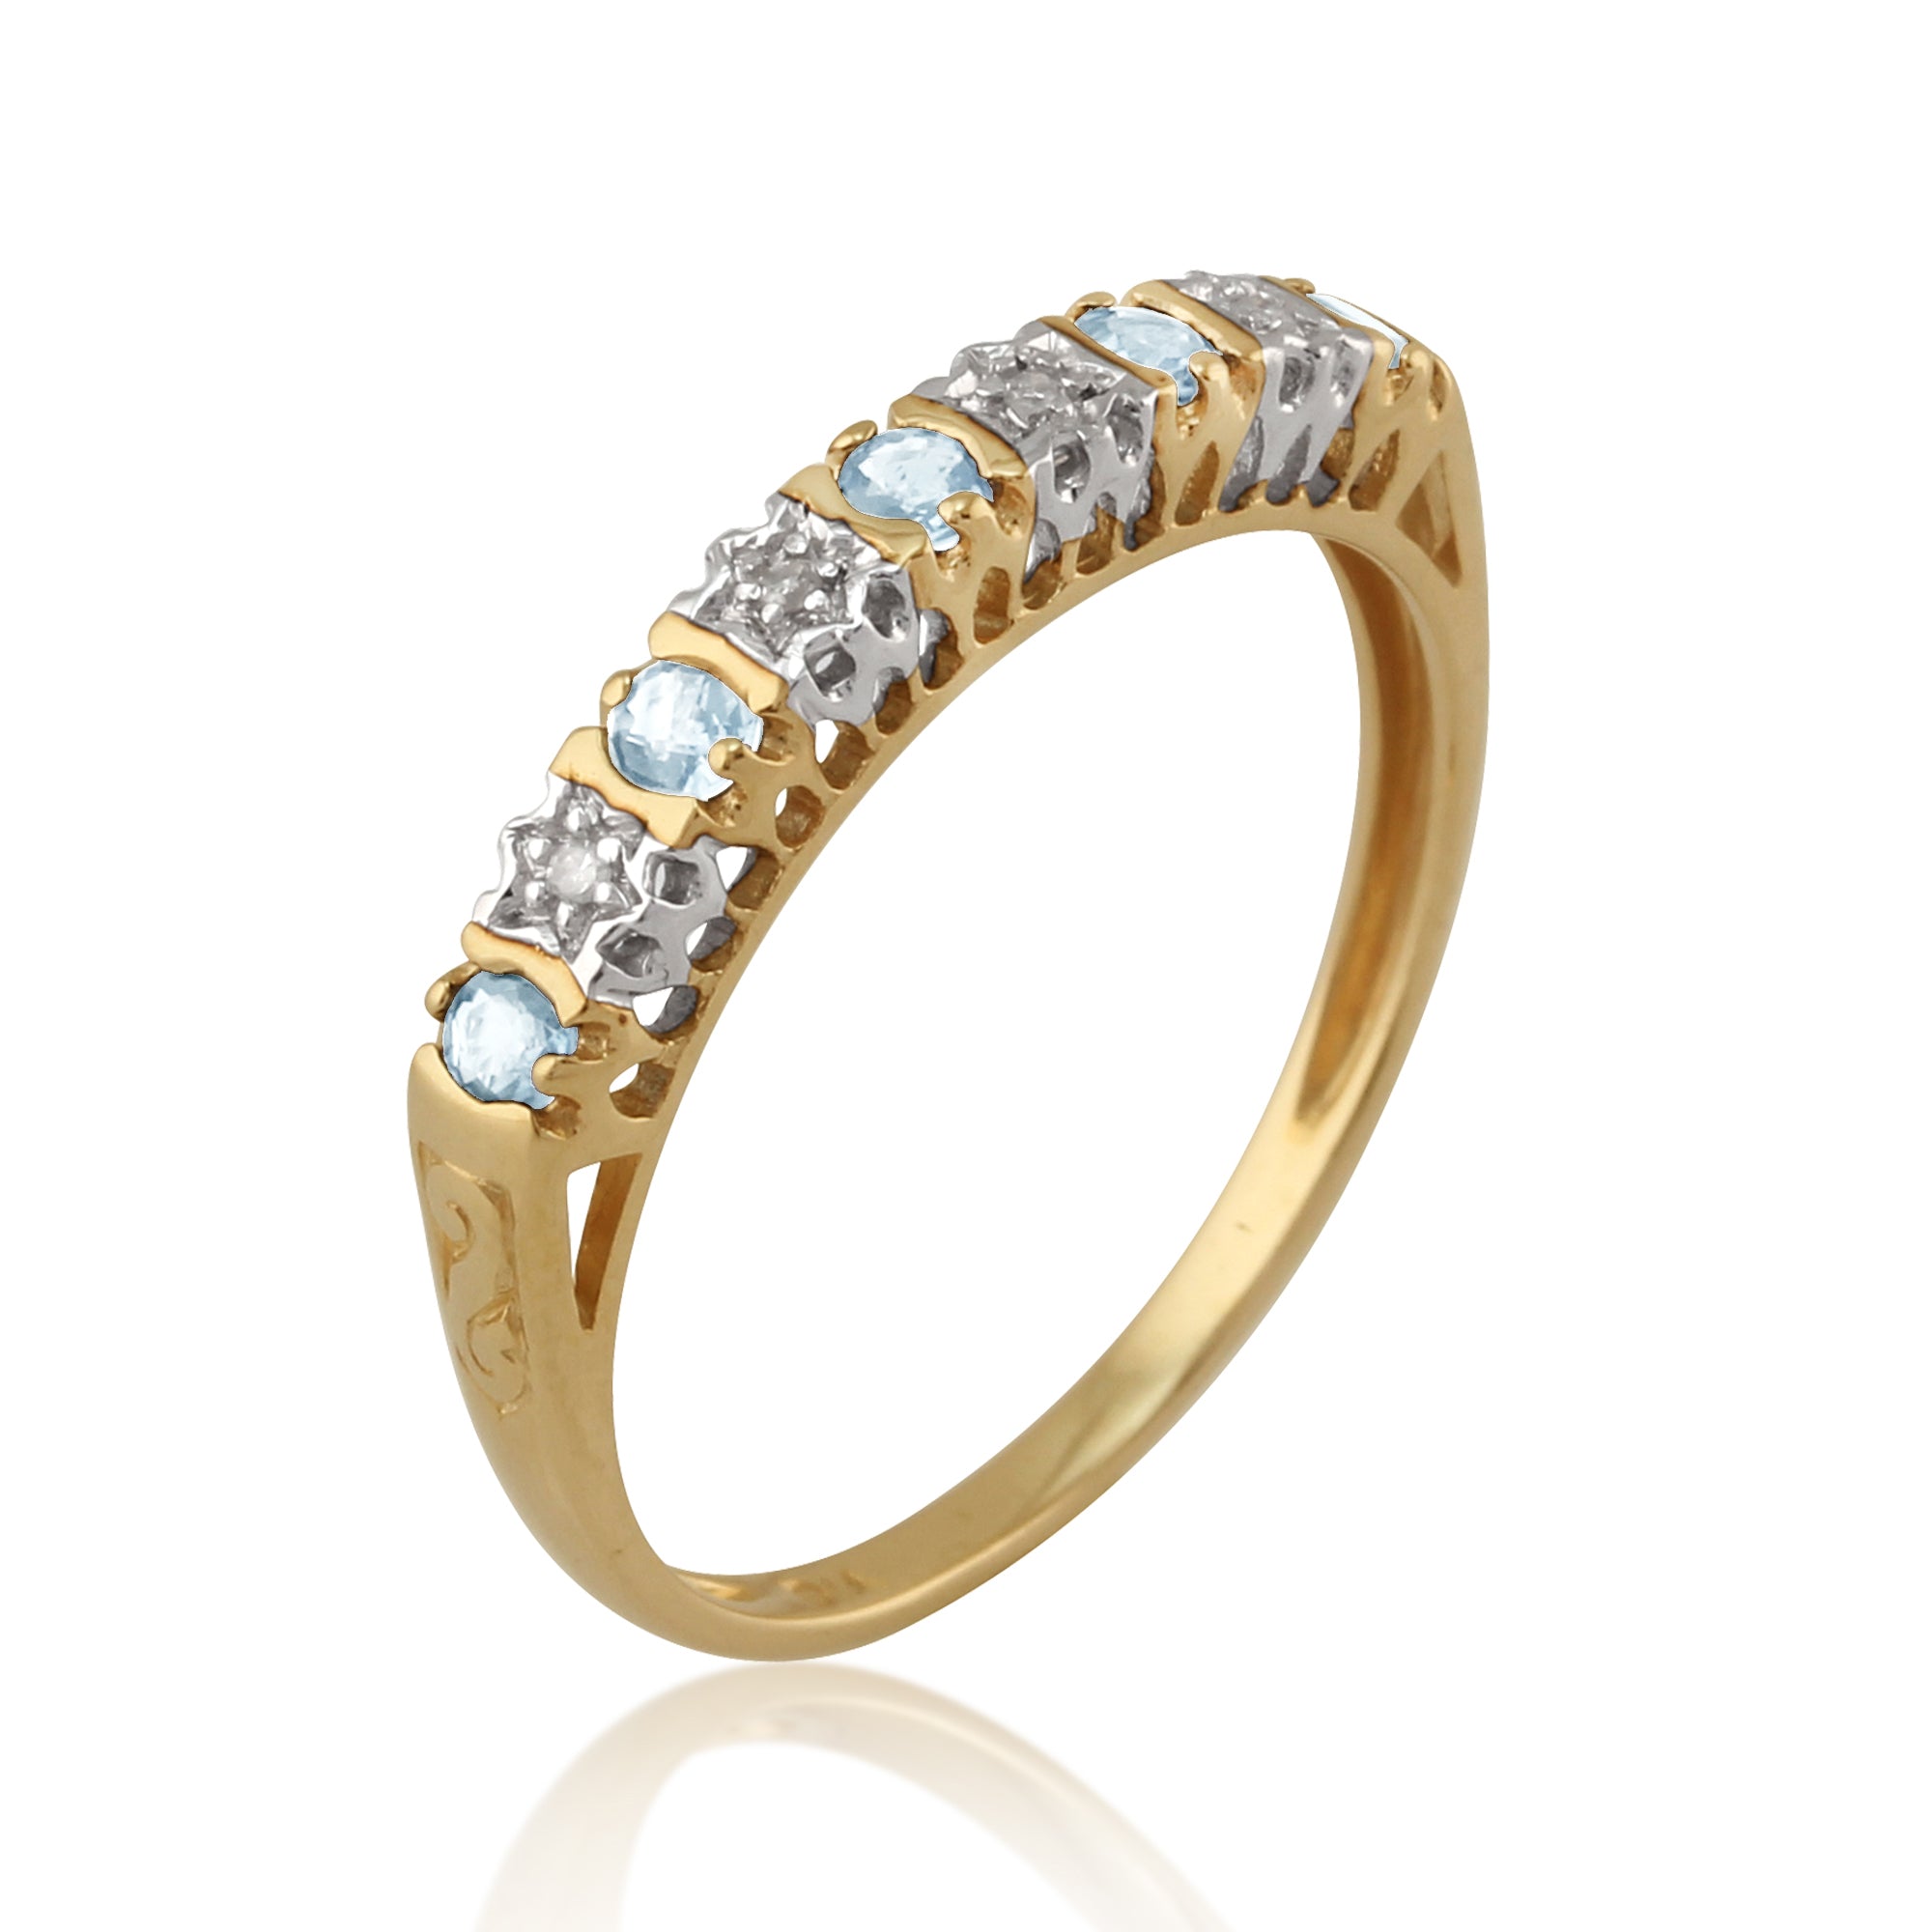 Classic Round Blue Topaz & Diamond Eternity Ring in 9ct Yellow Gold 